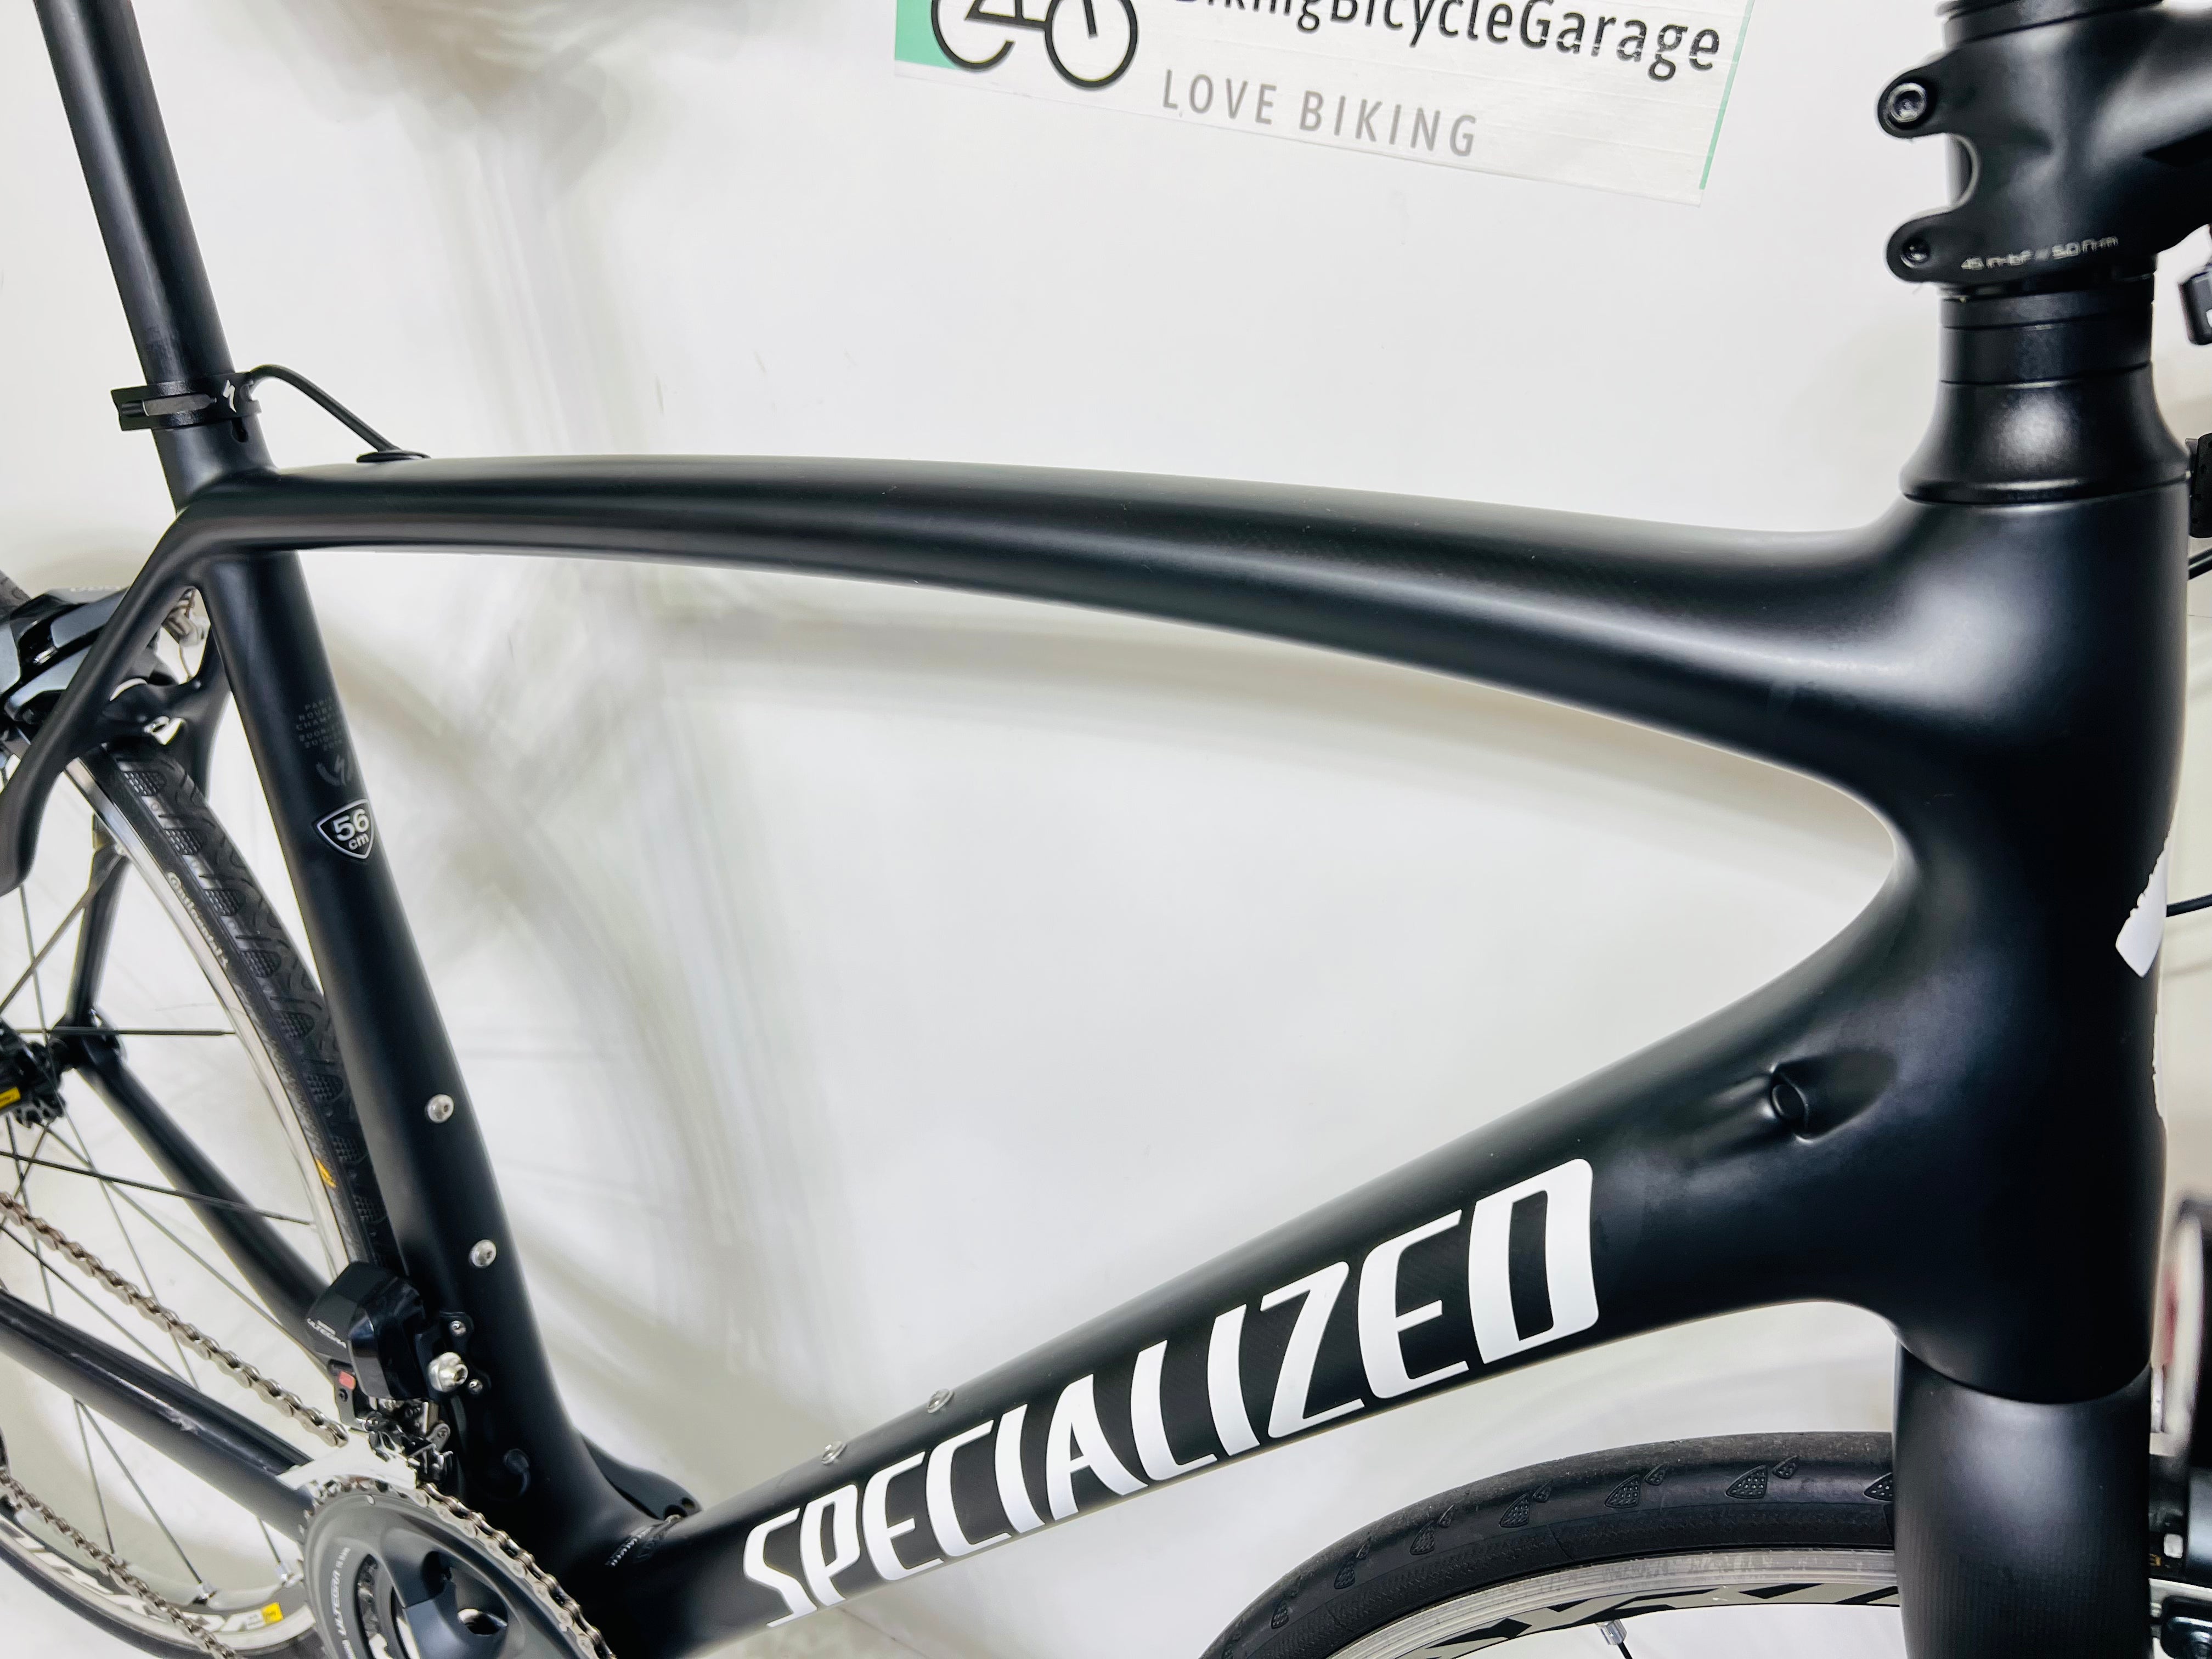 Specialized Roubaix SL4, 11-Speed Ultegra Di2, Carbon Road Bike, 17 Pounds! 56cm